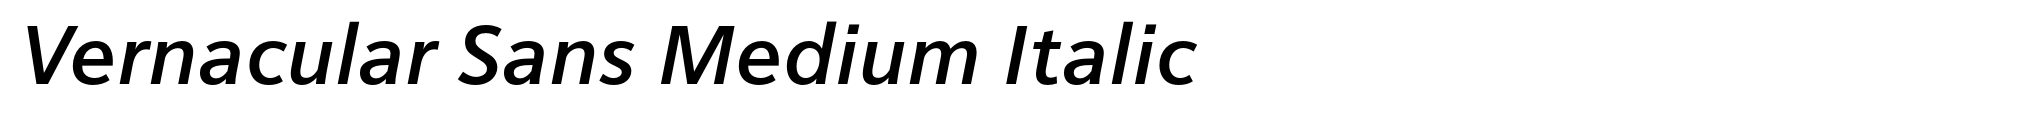 Vernacular Sans Medium Italic image